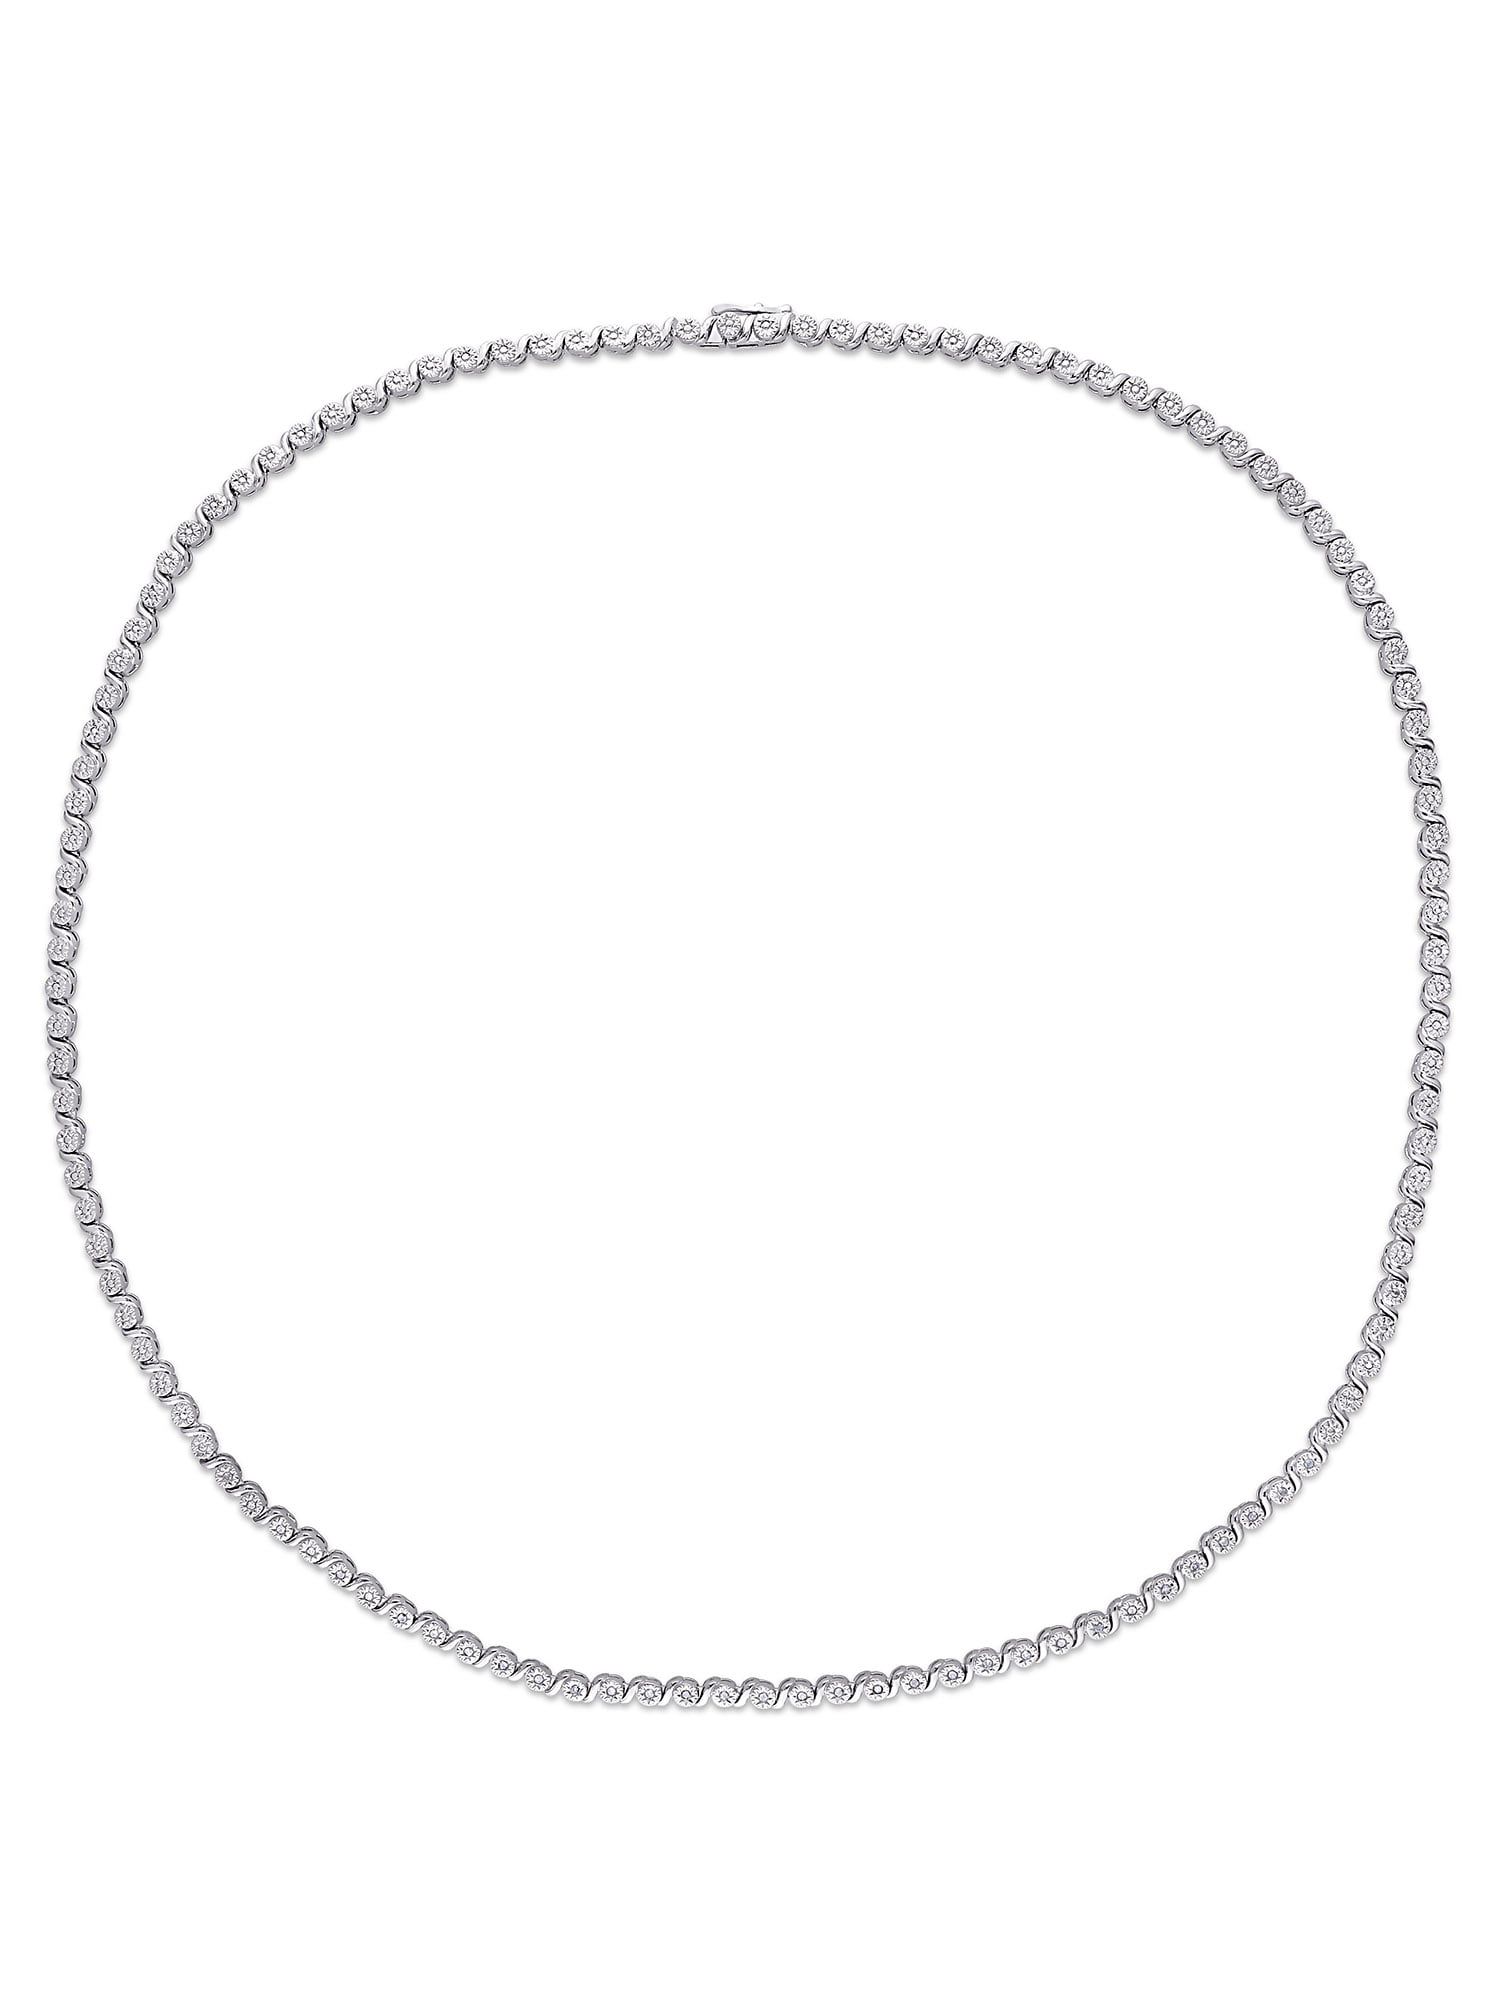 1/2 Carat T.W. Diamond Sterling Silver Tennis Necklace